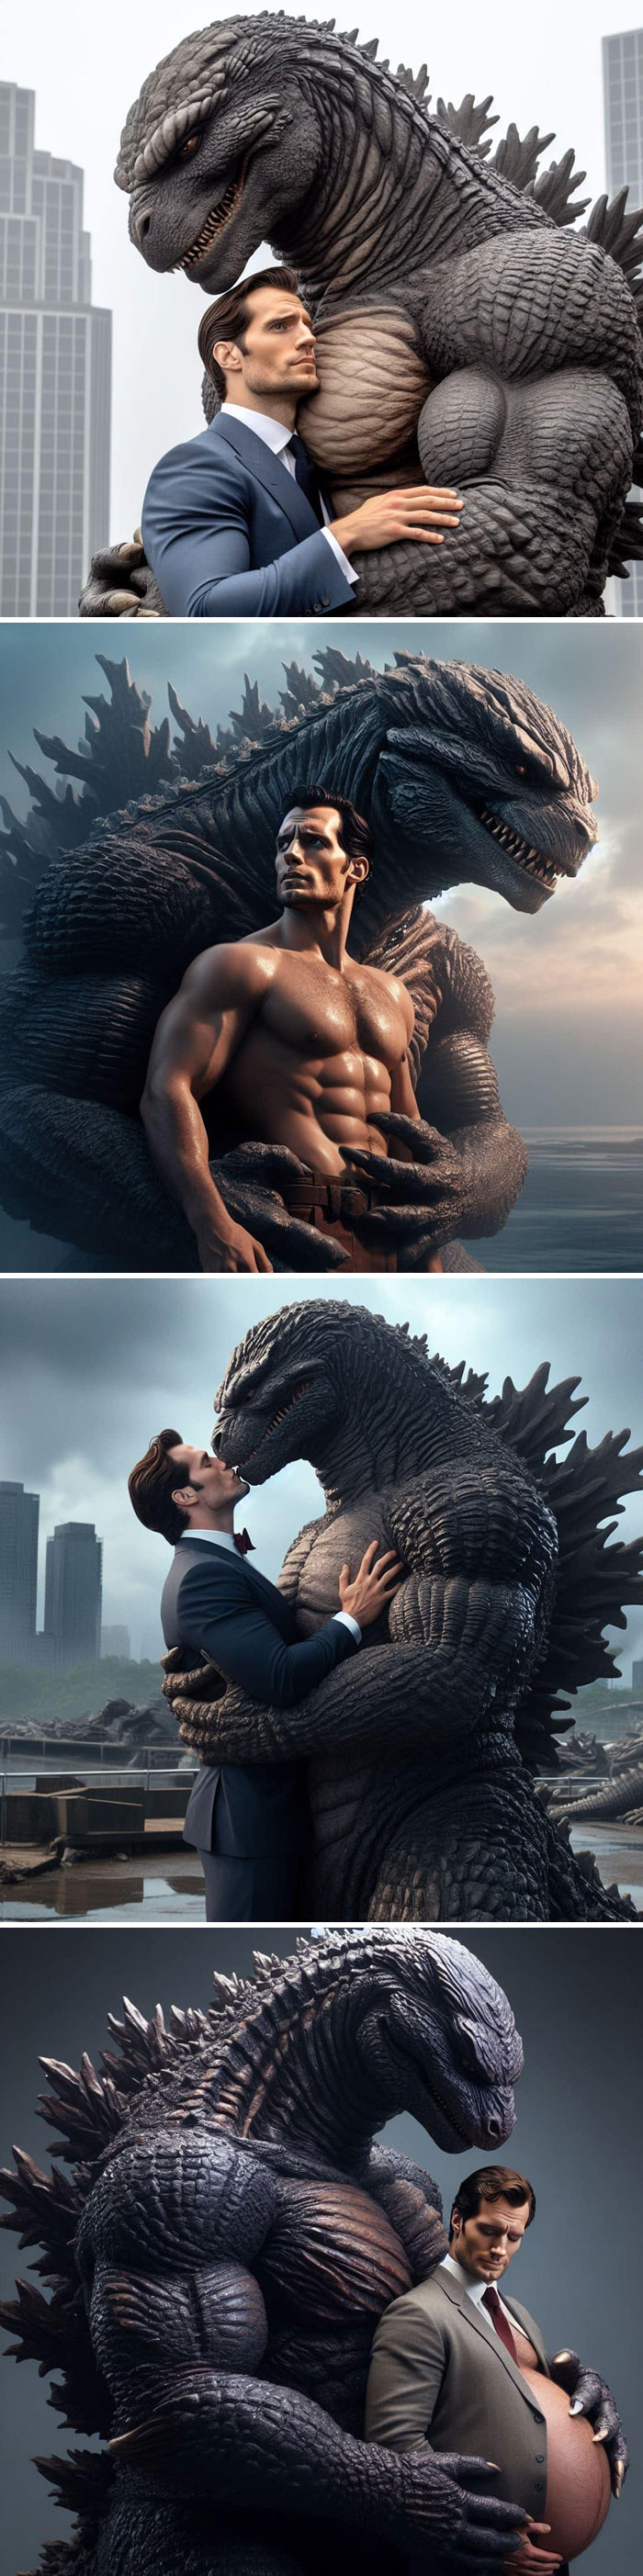 Godzilla y Henry Cavill